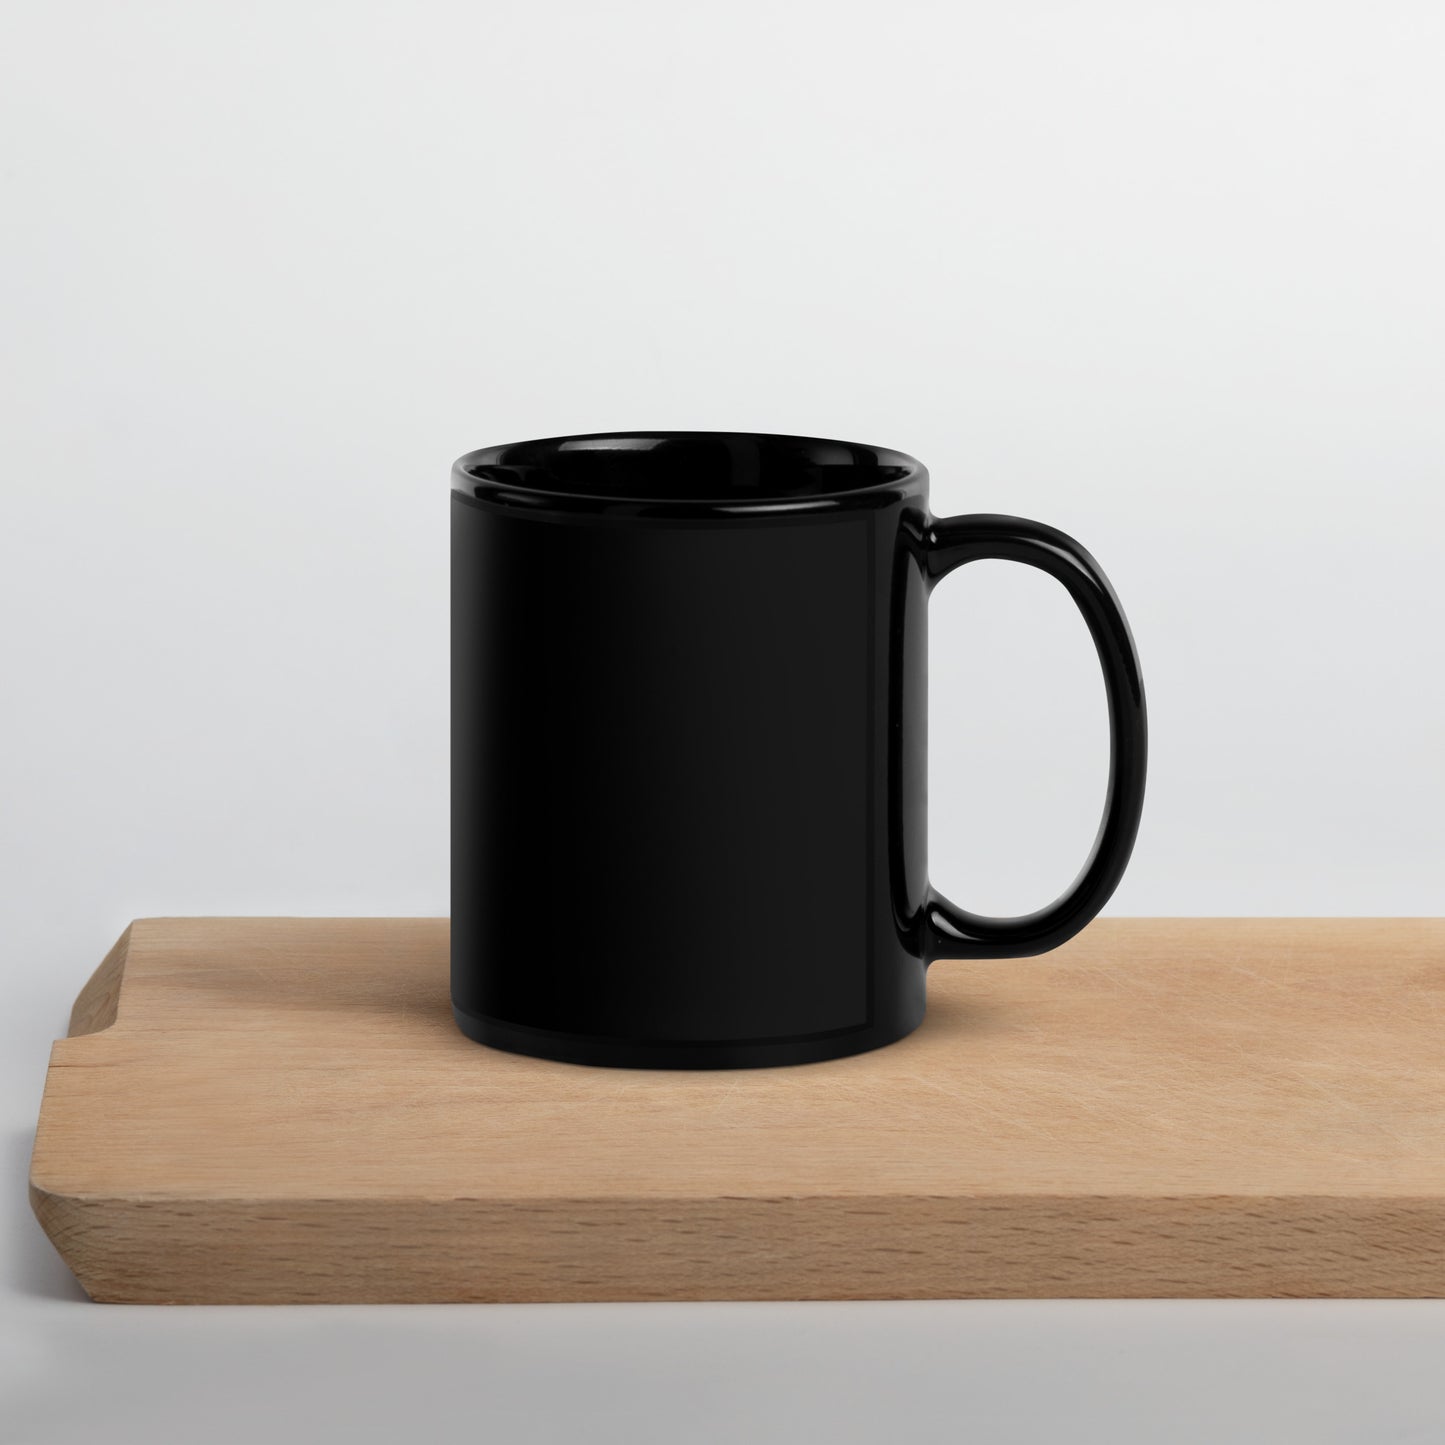 The Dark Zone black mug